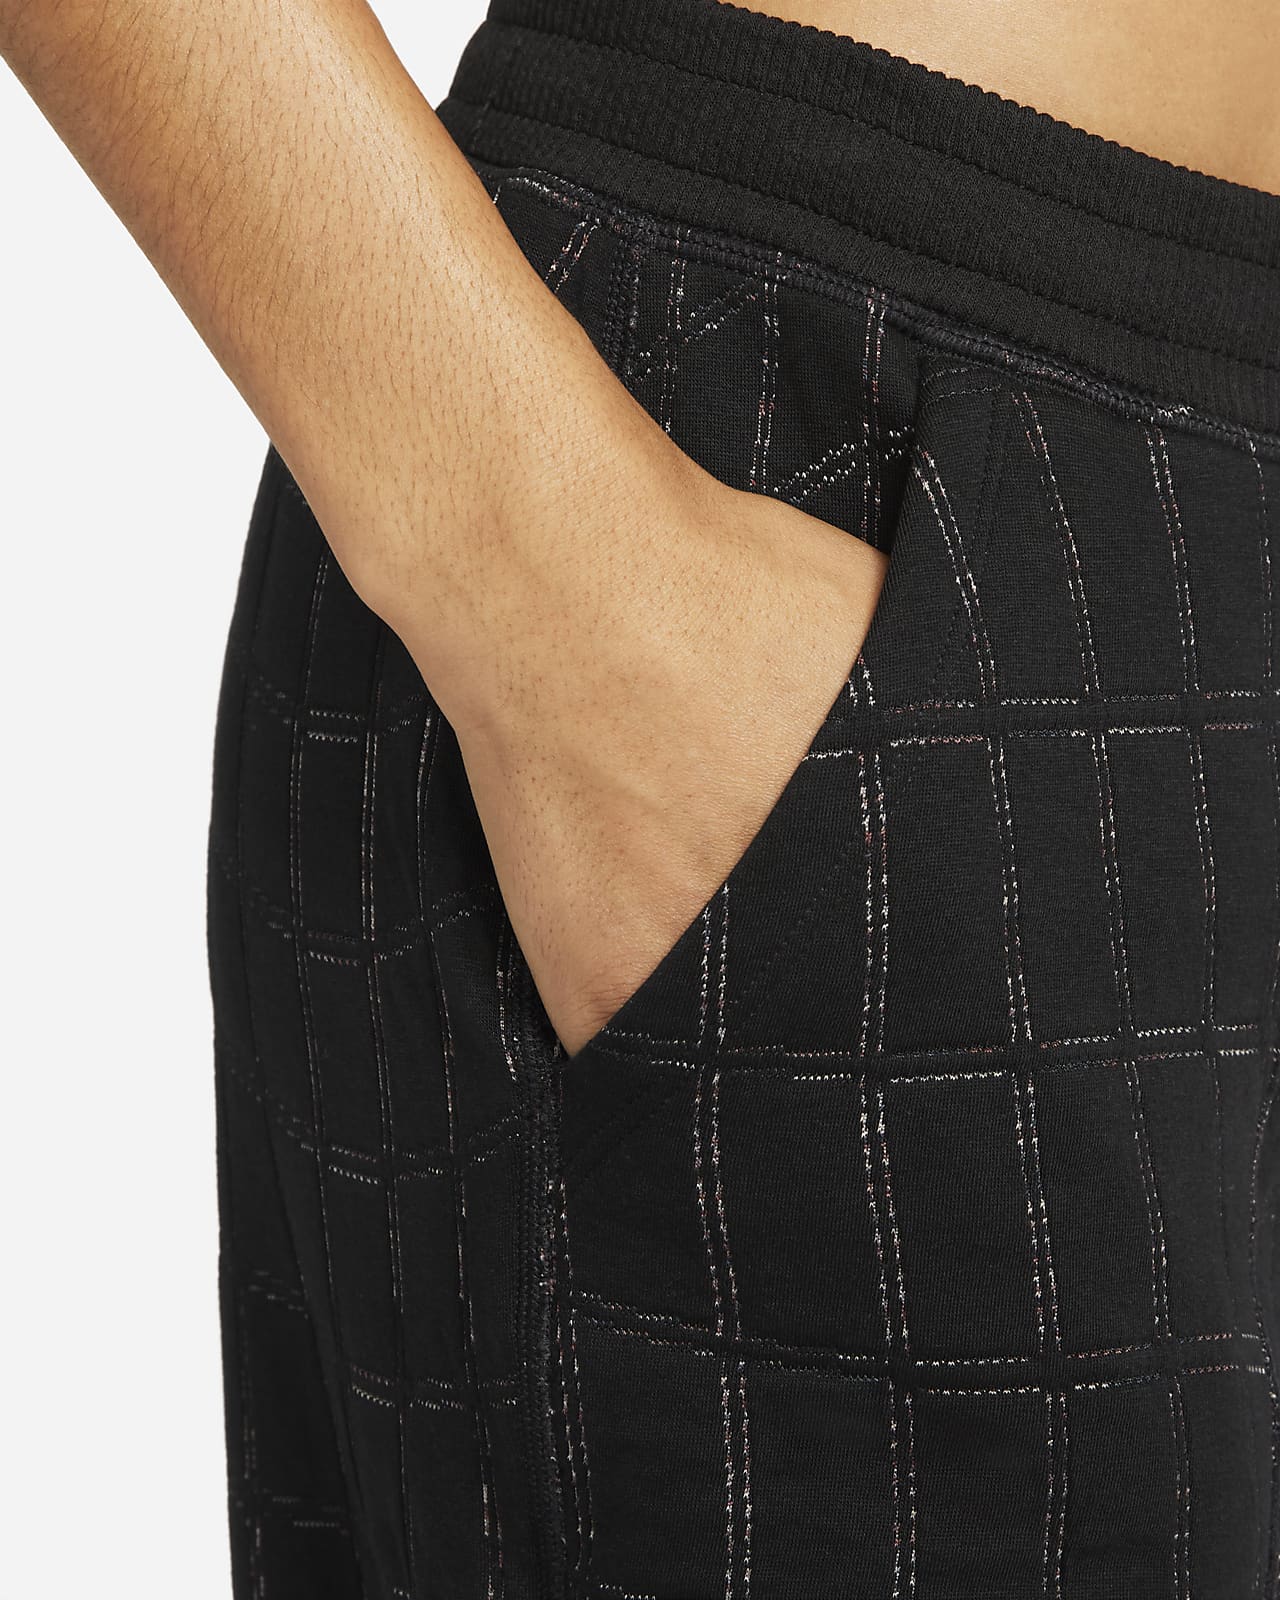 Nike Yoga Therma-FIT Luxe Women's Reversible Fleece Pants